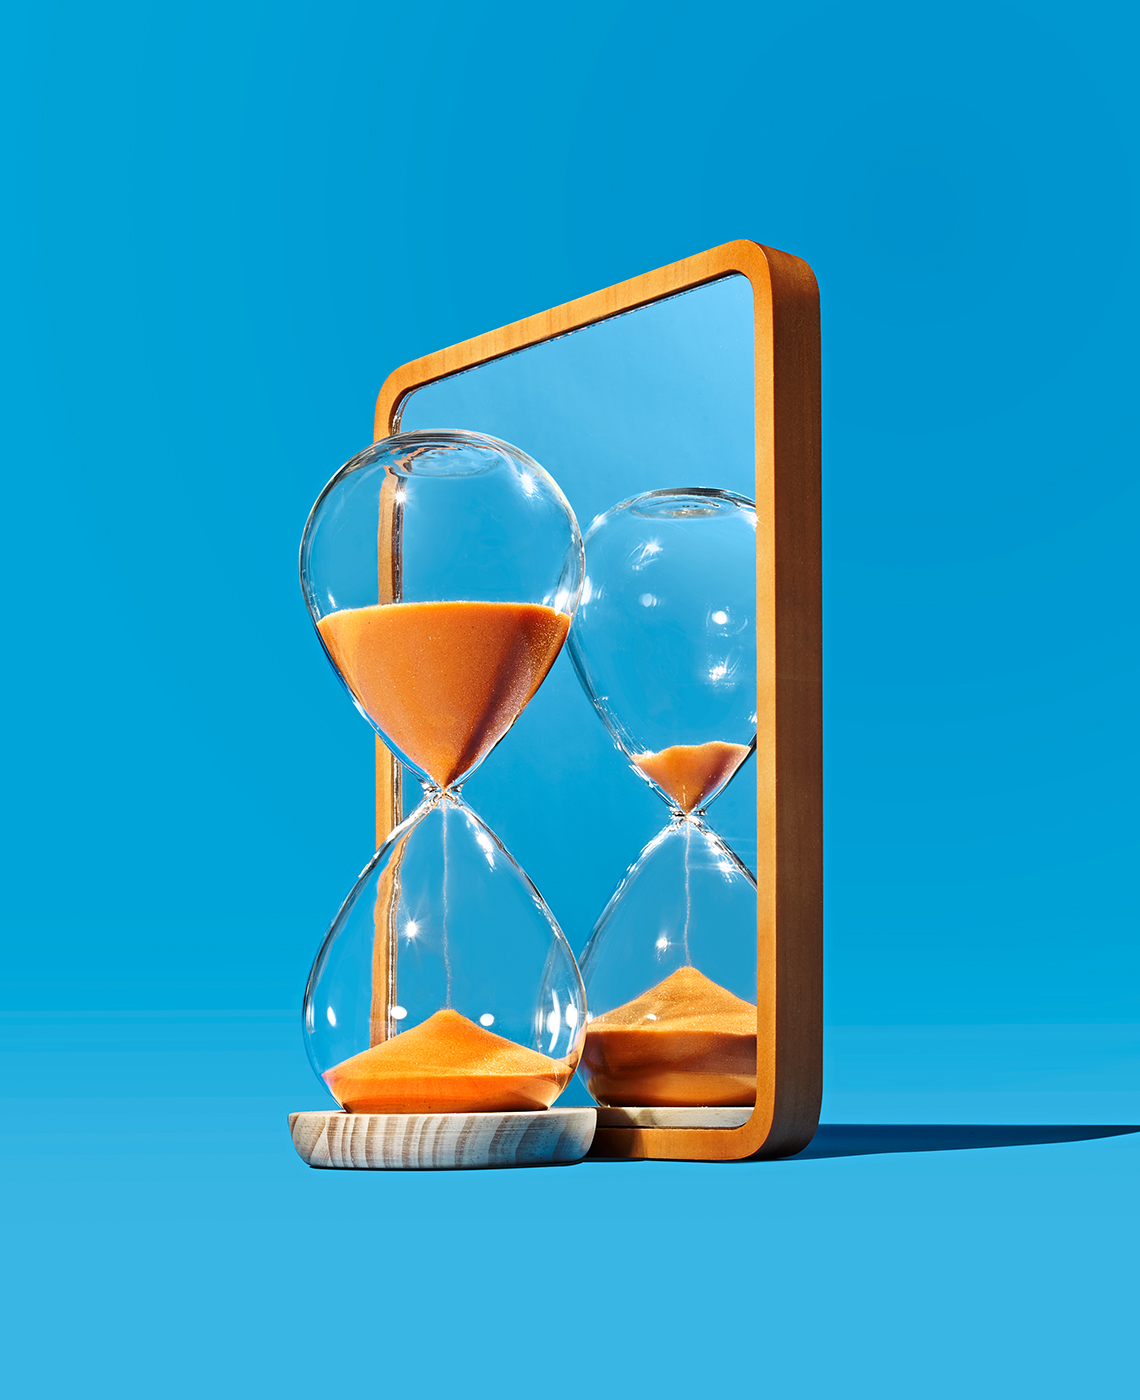 Un reloj de arena frente a un espejo con un fondo azul